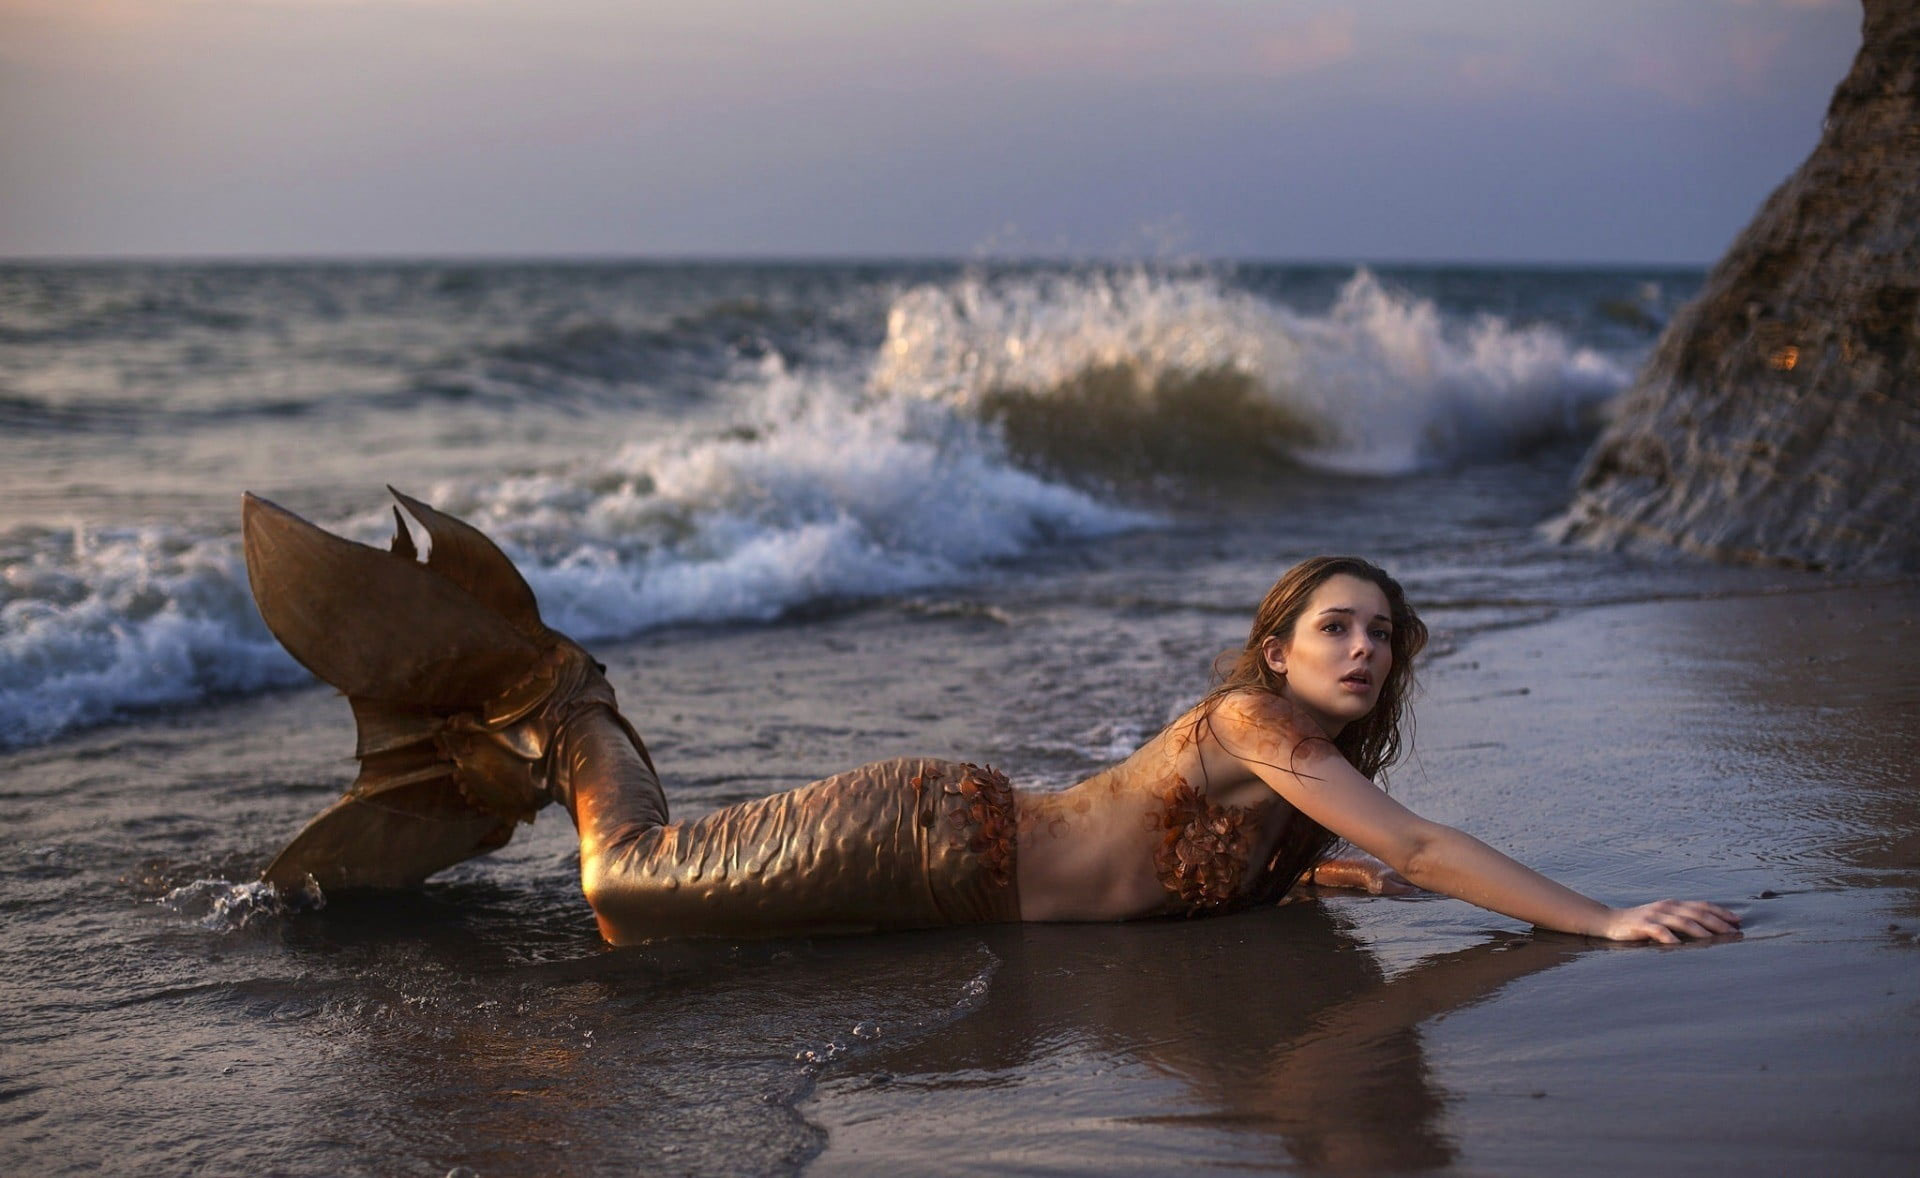 Wallpaper Photo Of Mermaid On Seashore, Fantasy Art